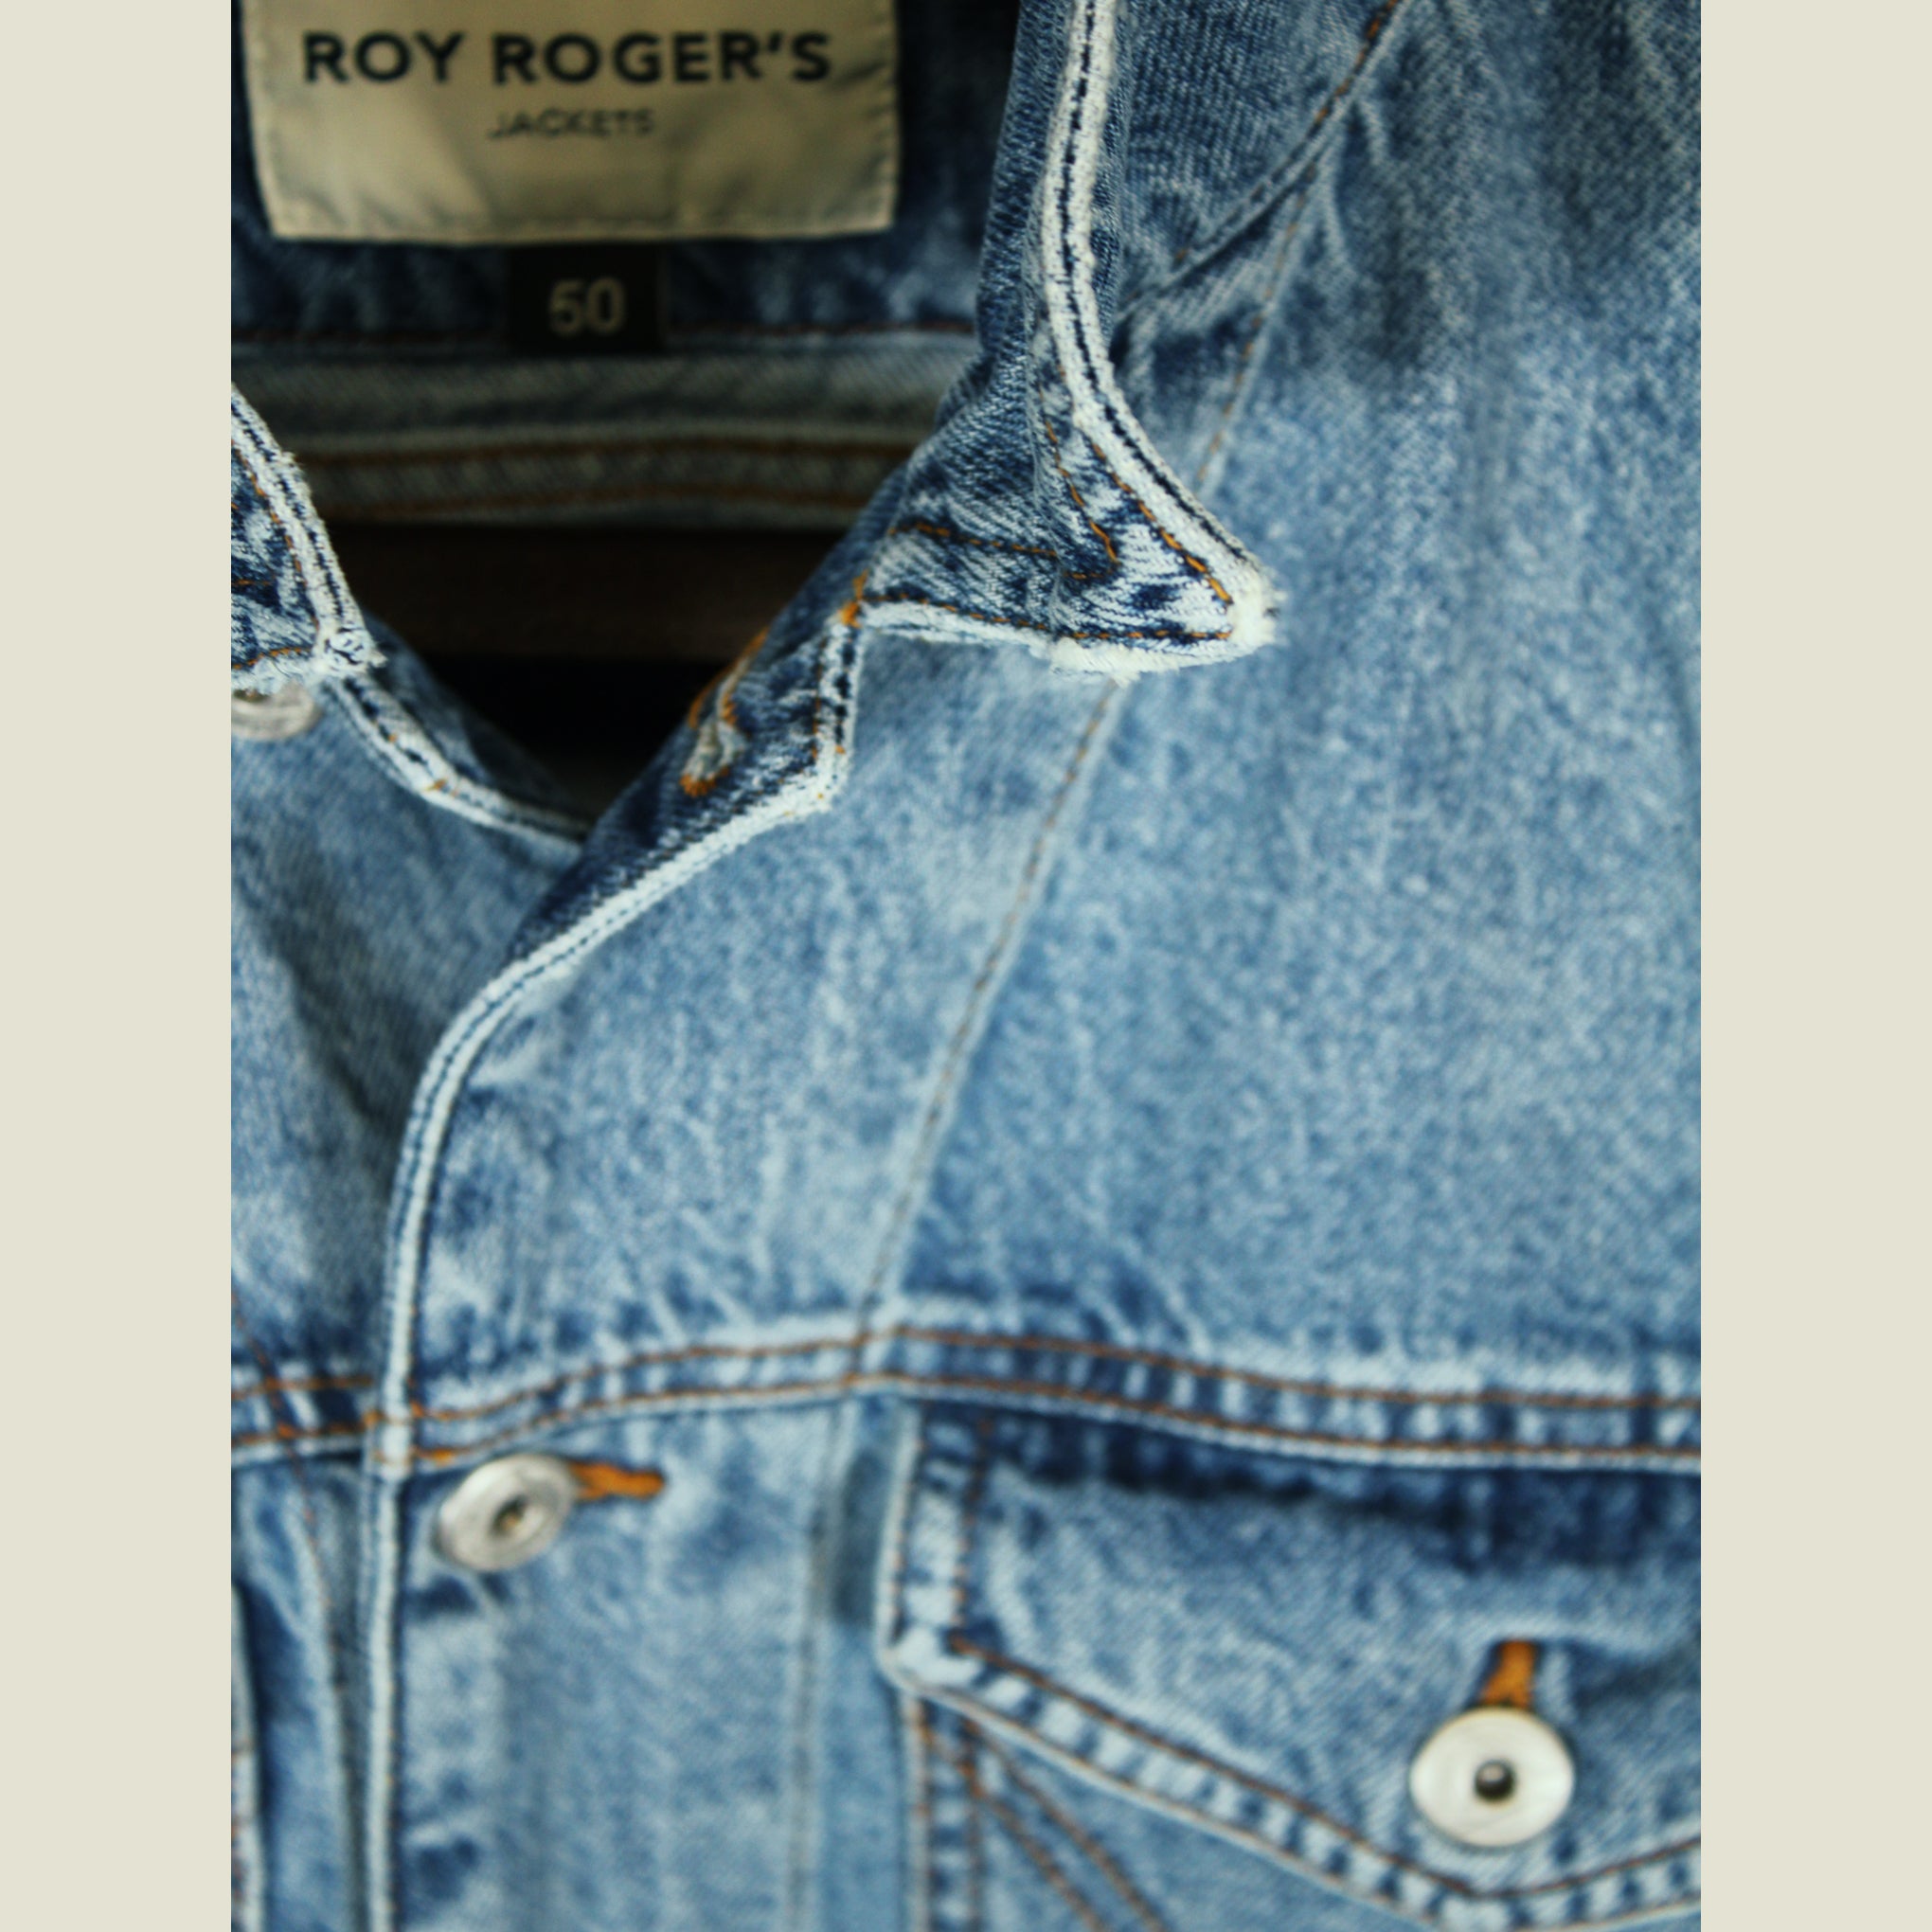 ROY ROGER’S Denim Jacket